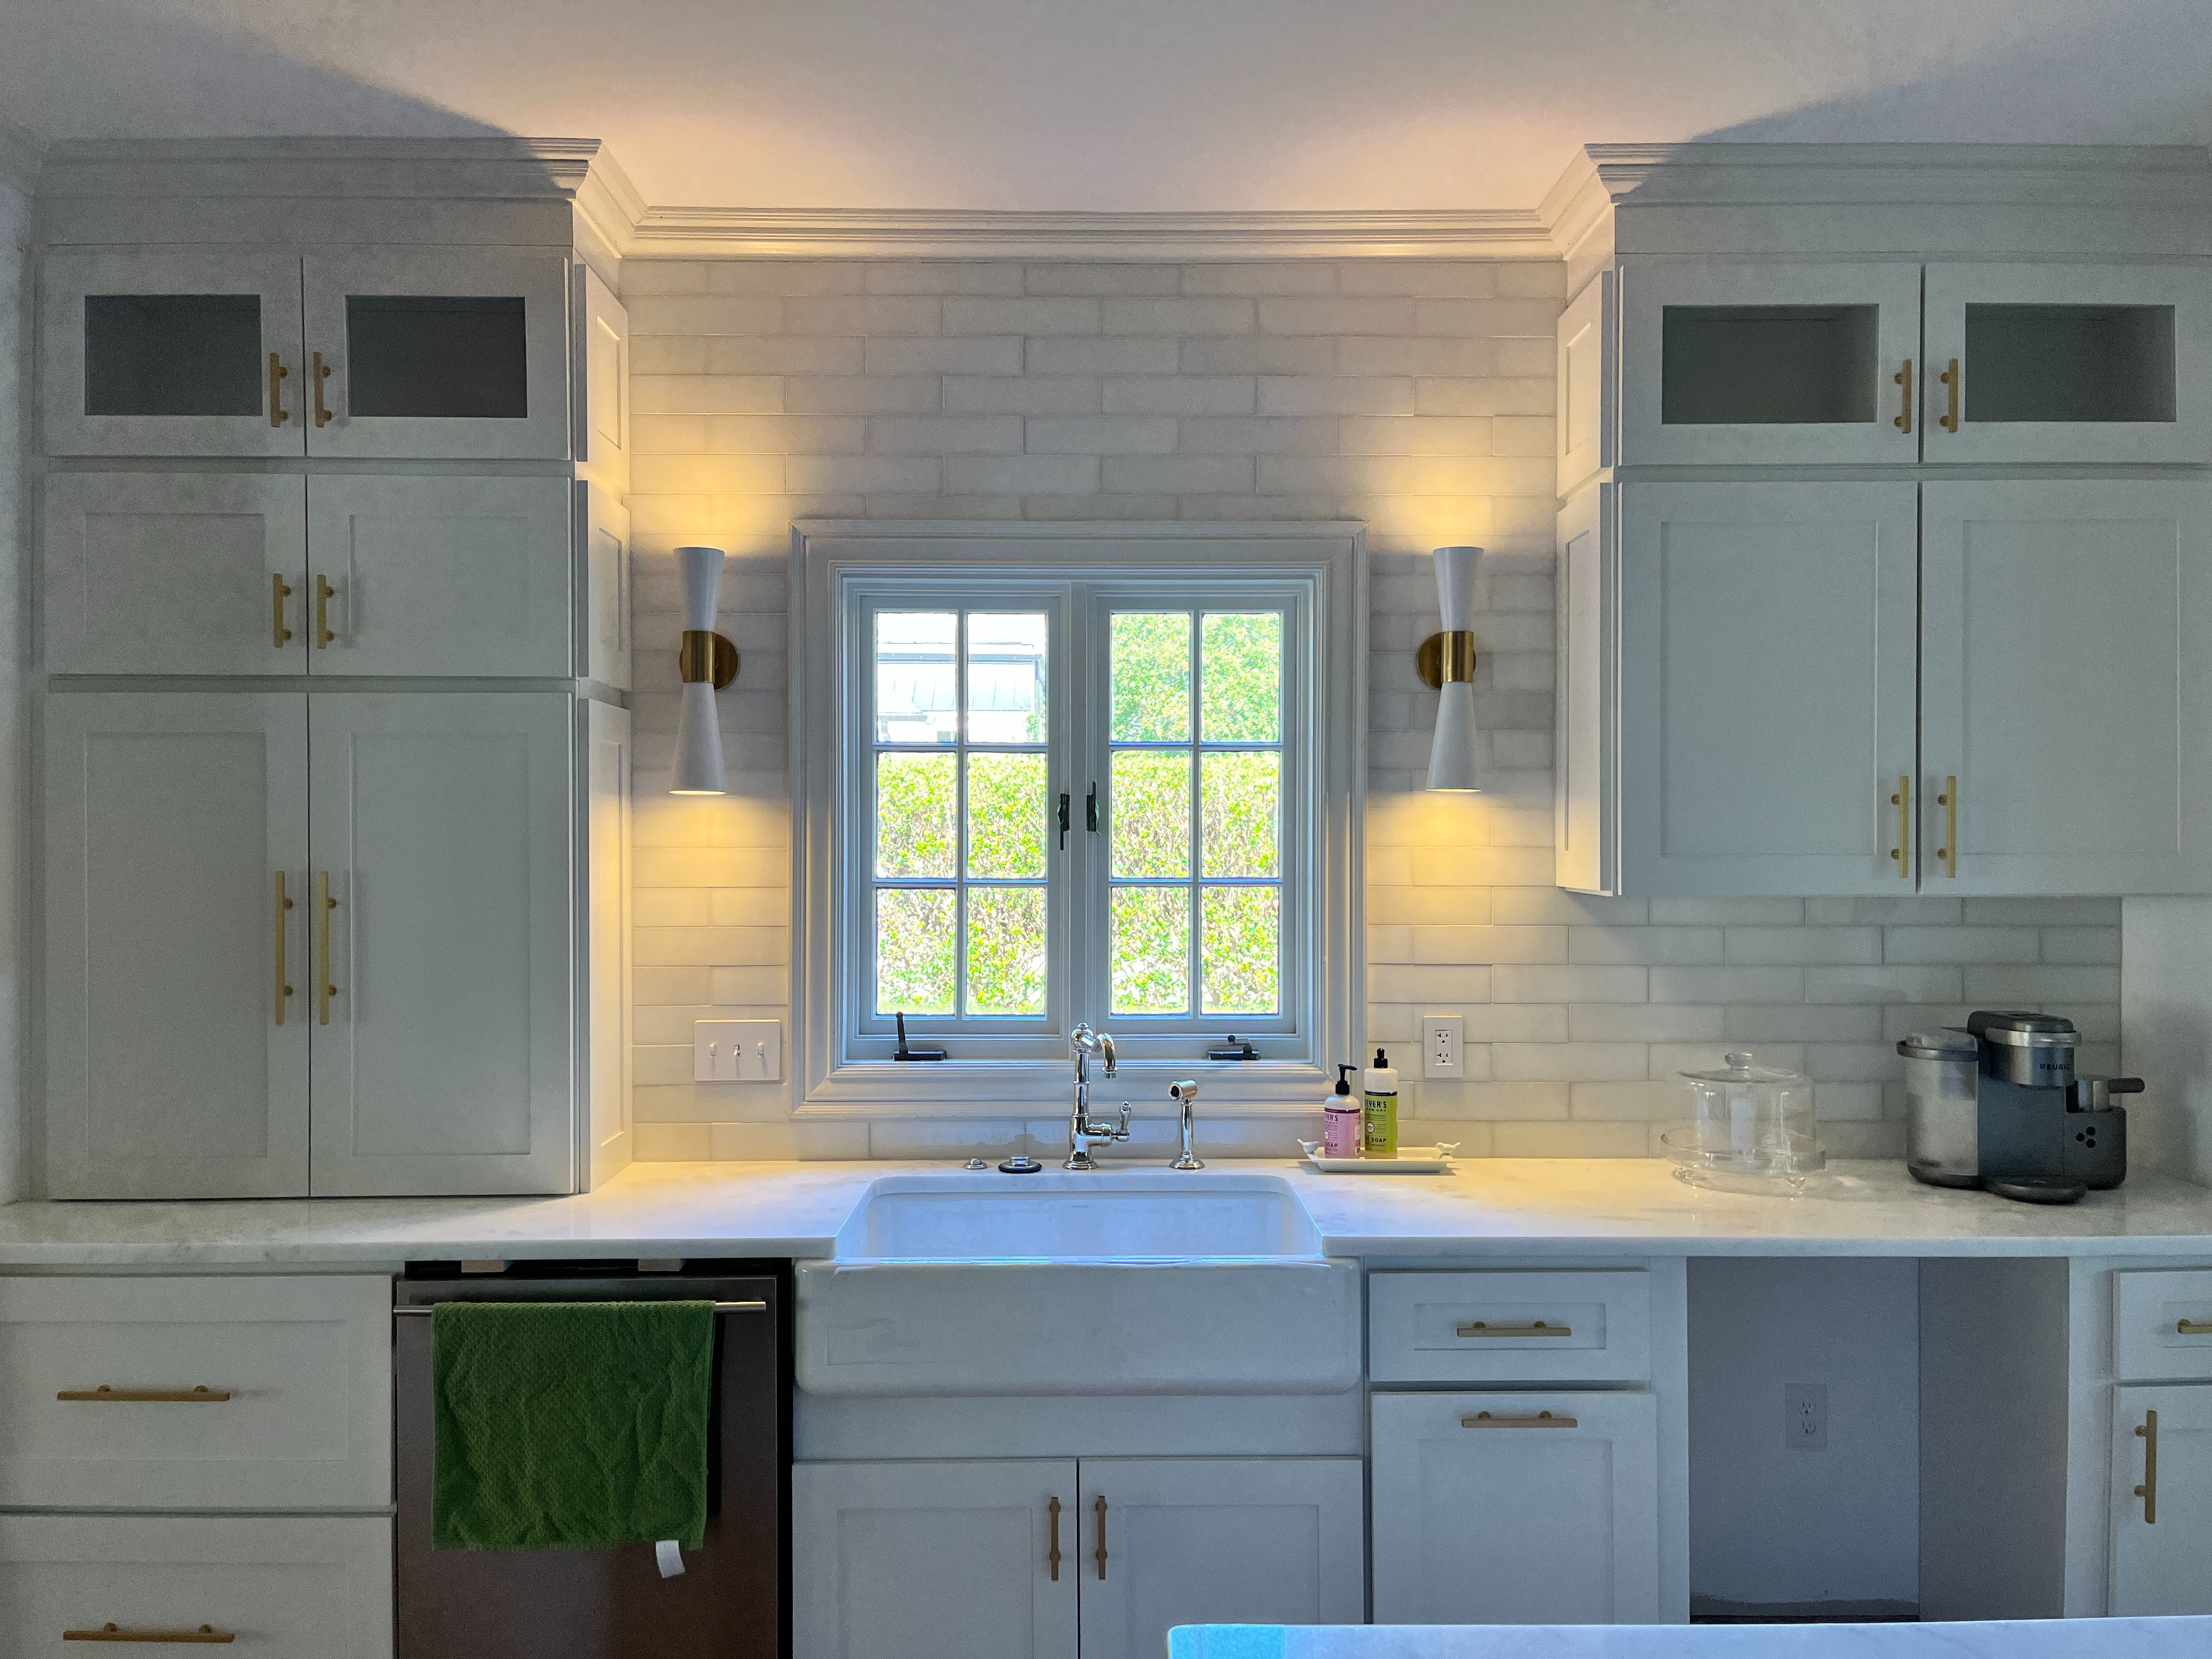 Photo by Alejandro Patat interior-design-of-a-kitchen-13831811